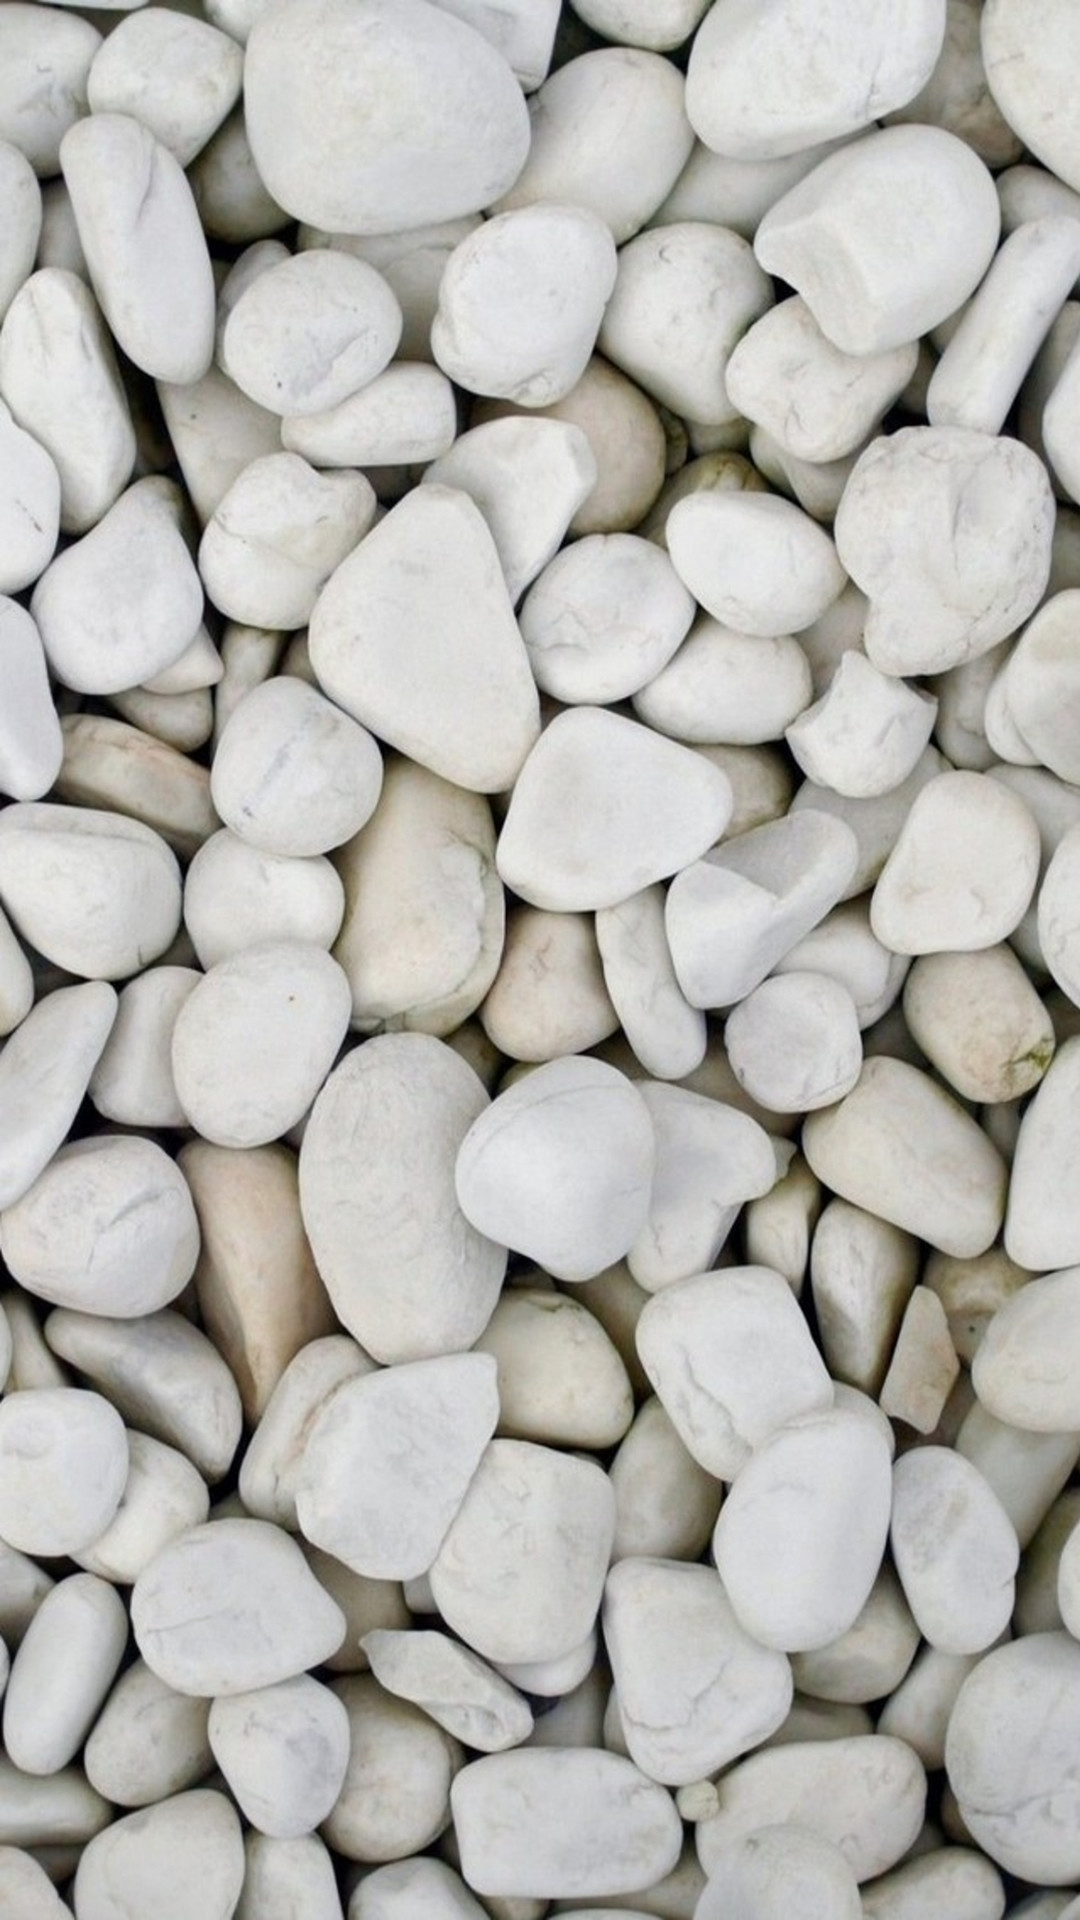 1080x1920 Beach White Pebble Rock Clitter Background iPhone 6 wallpaper